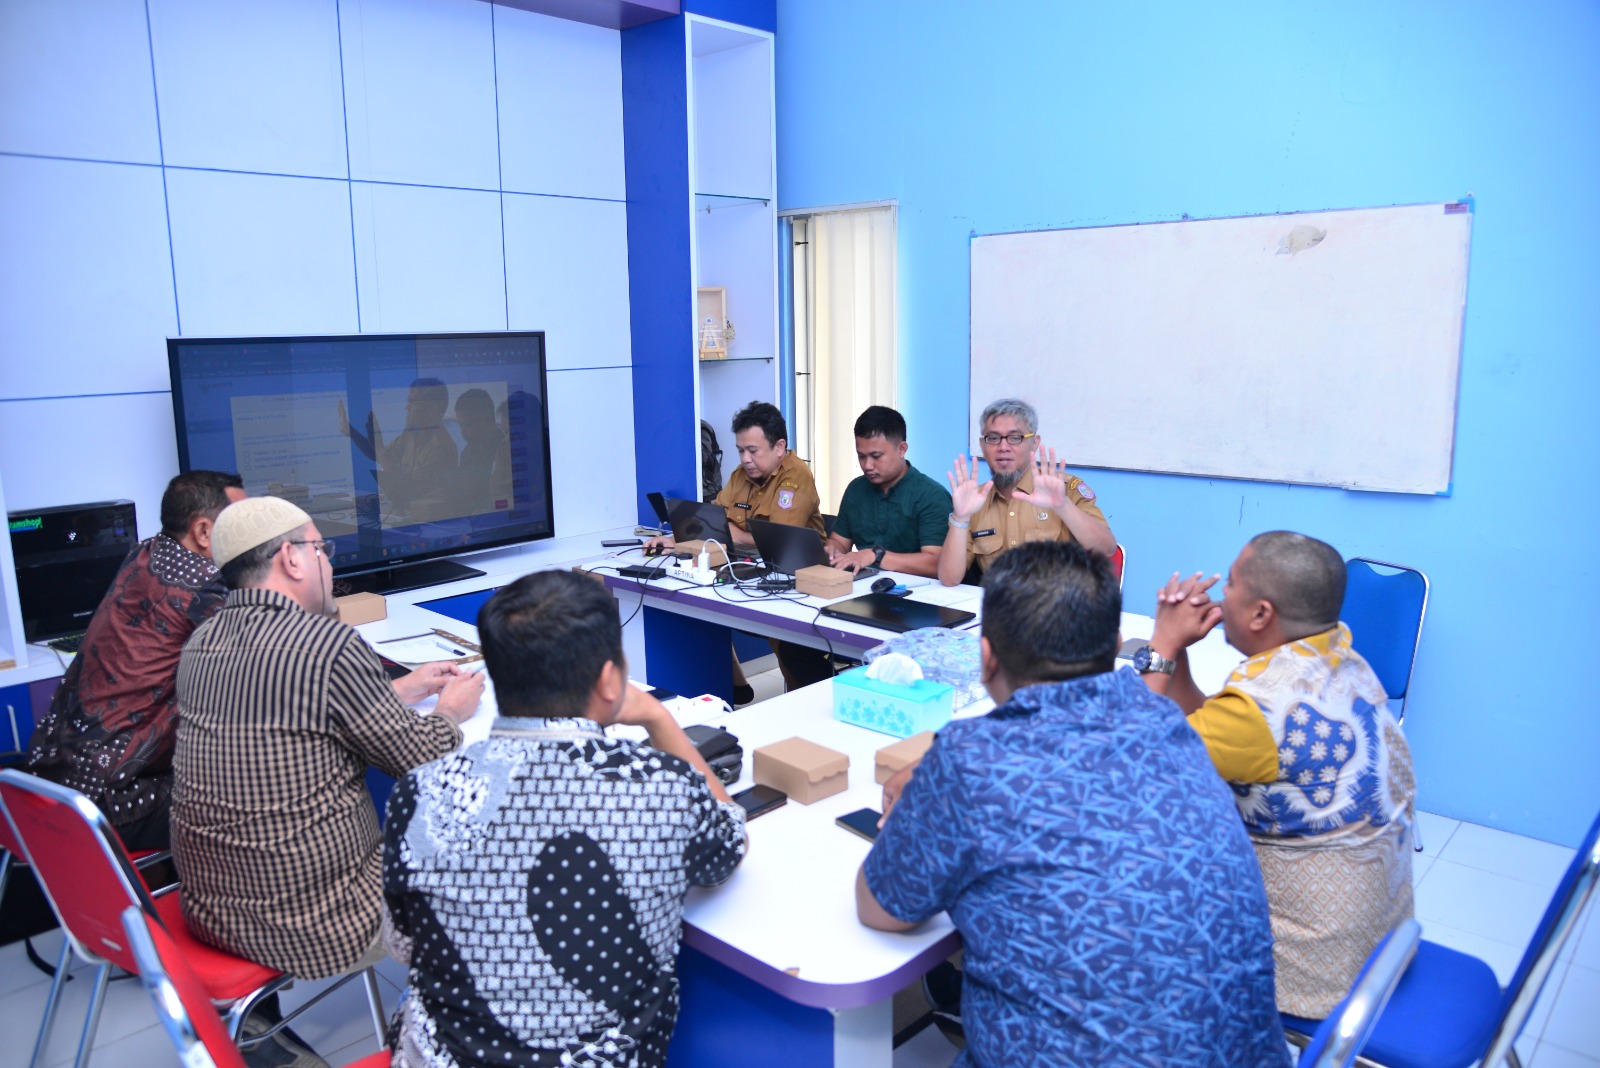 Diskominfosan Maluku Utara Belajar SPBE di Gorontalo